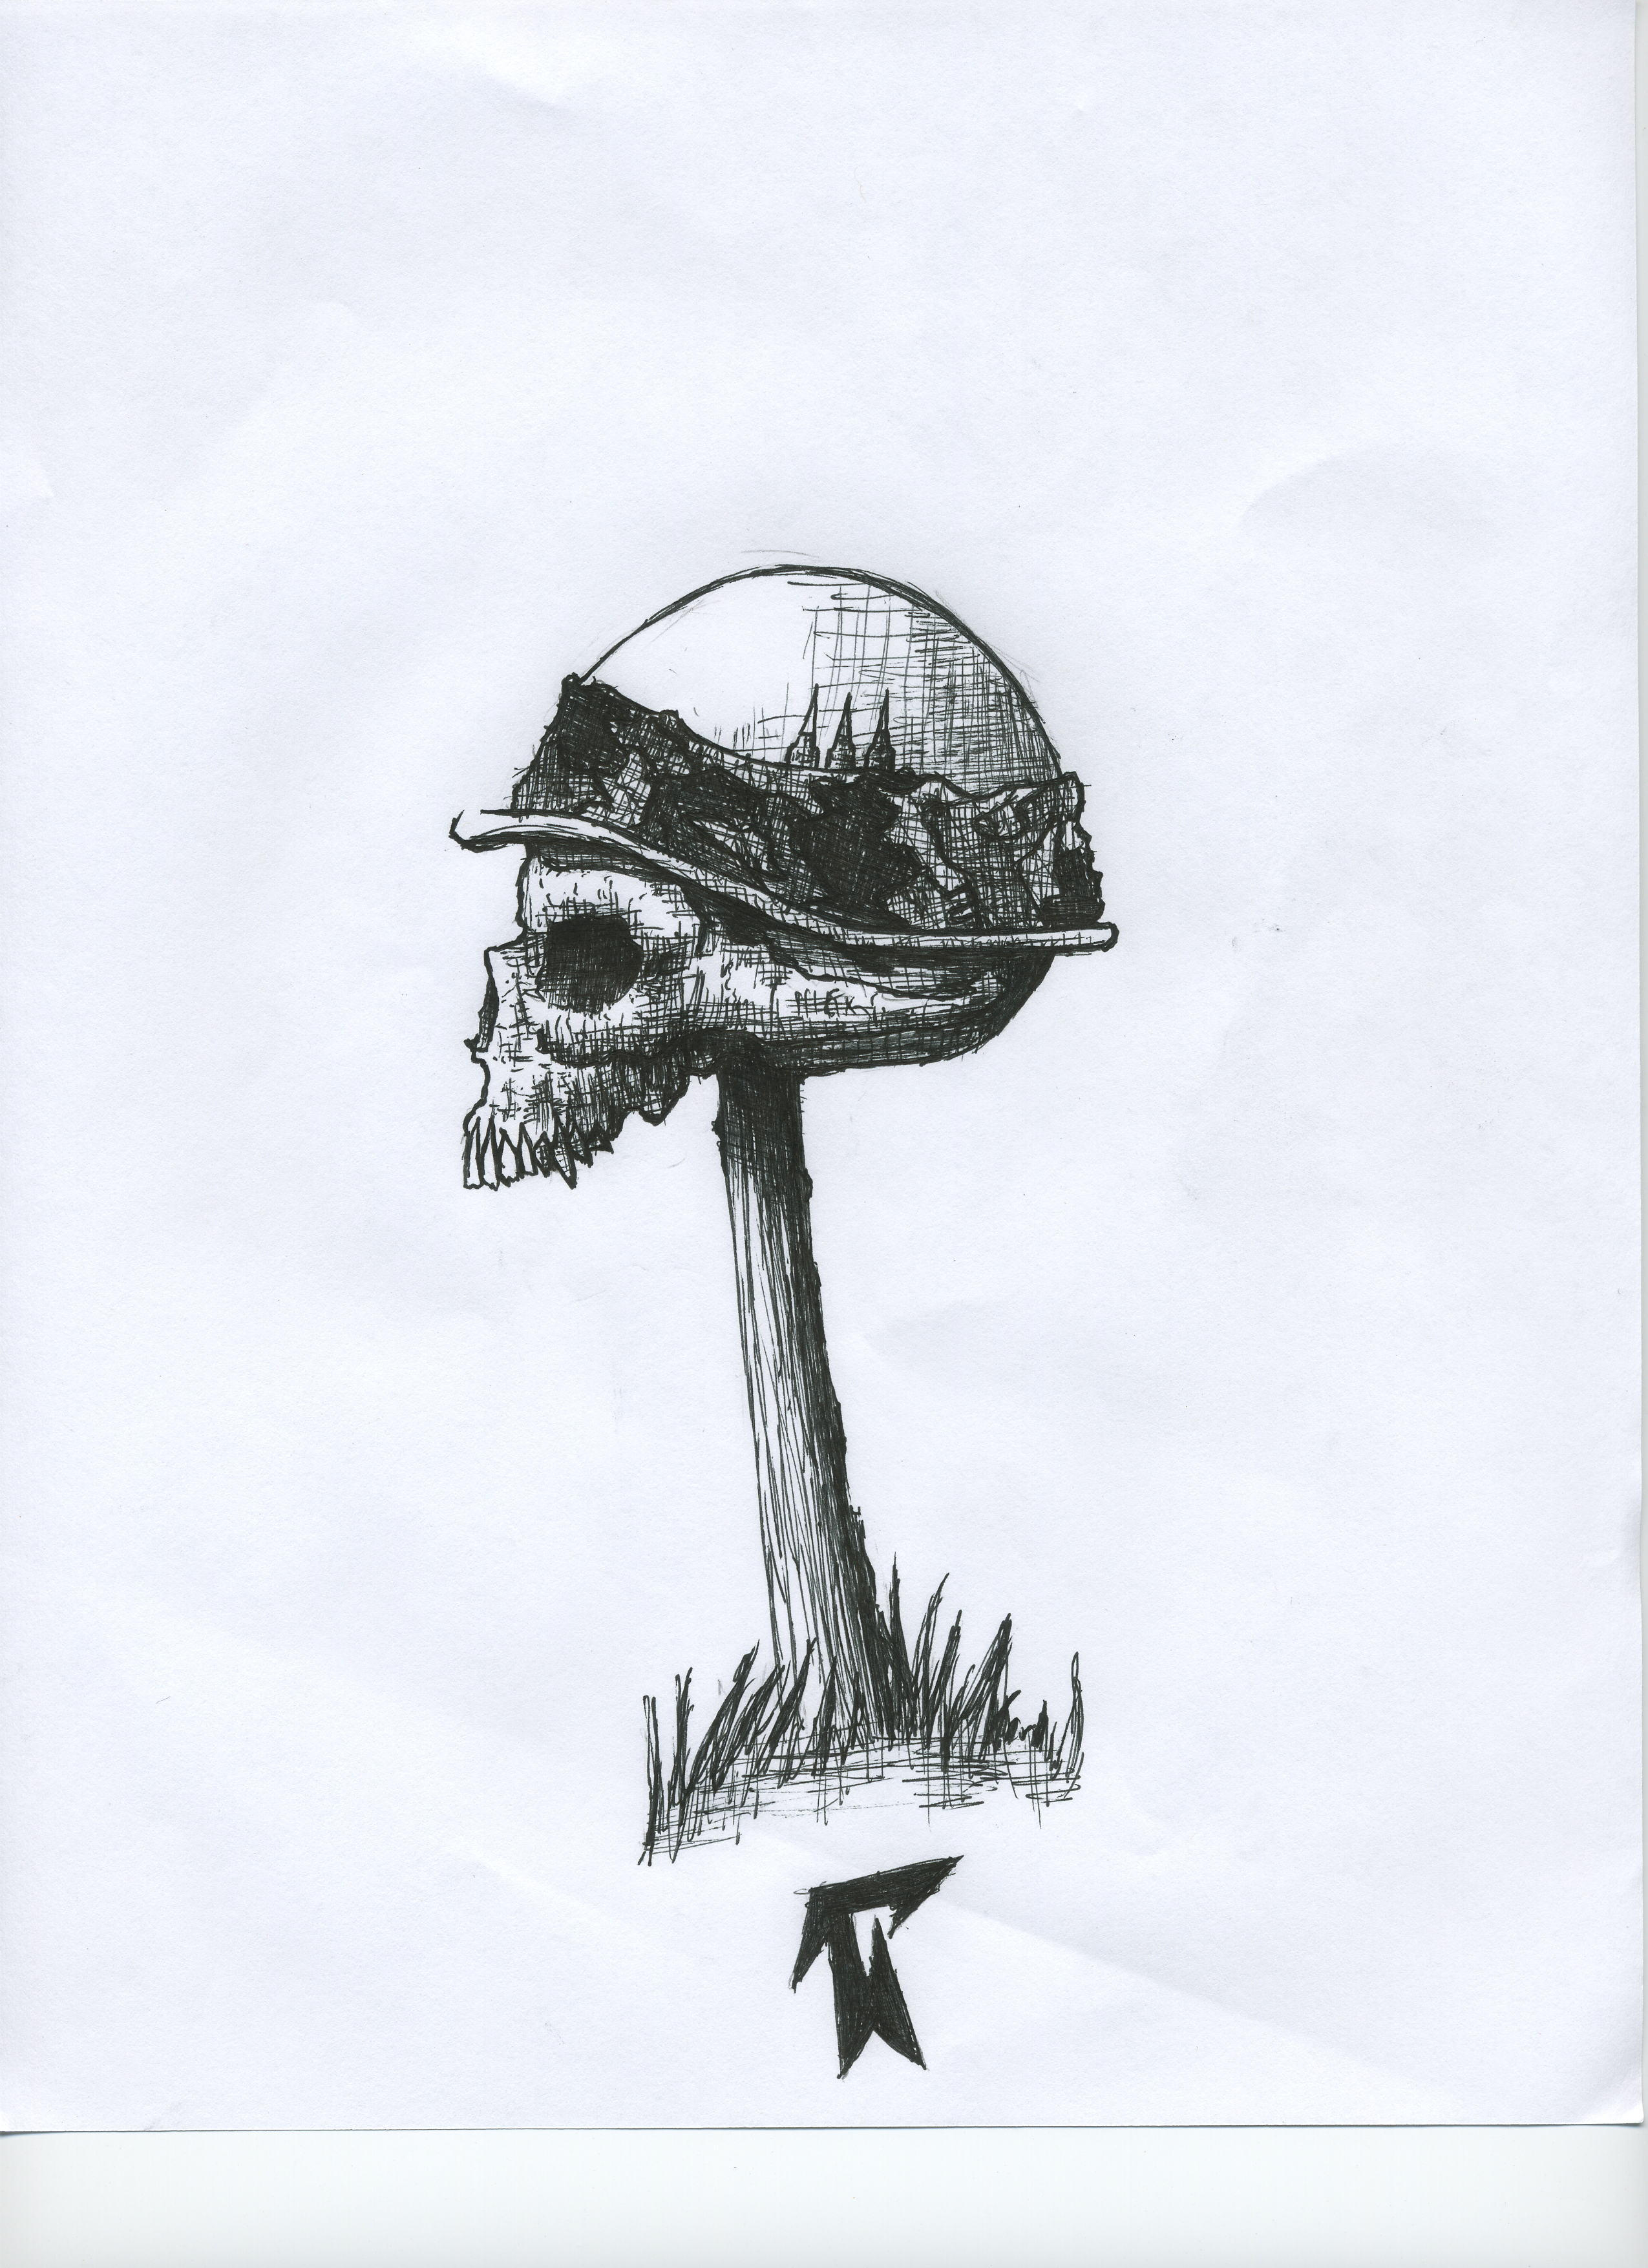 The army skull by Thatguy101 on deviantART